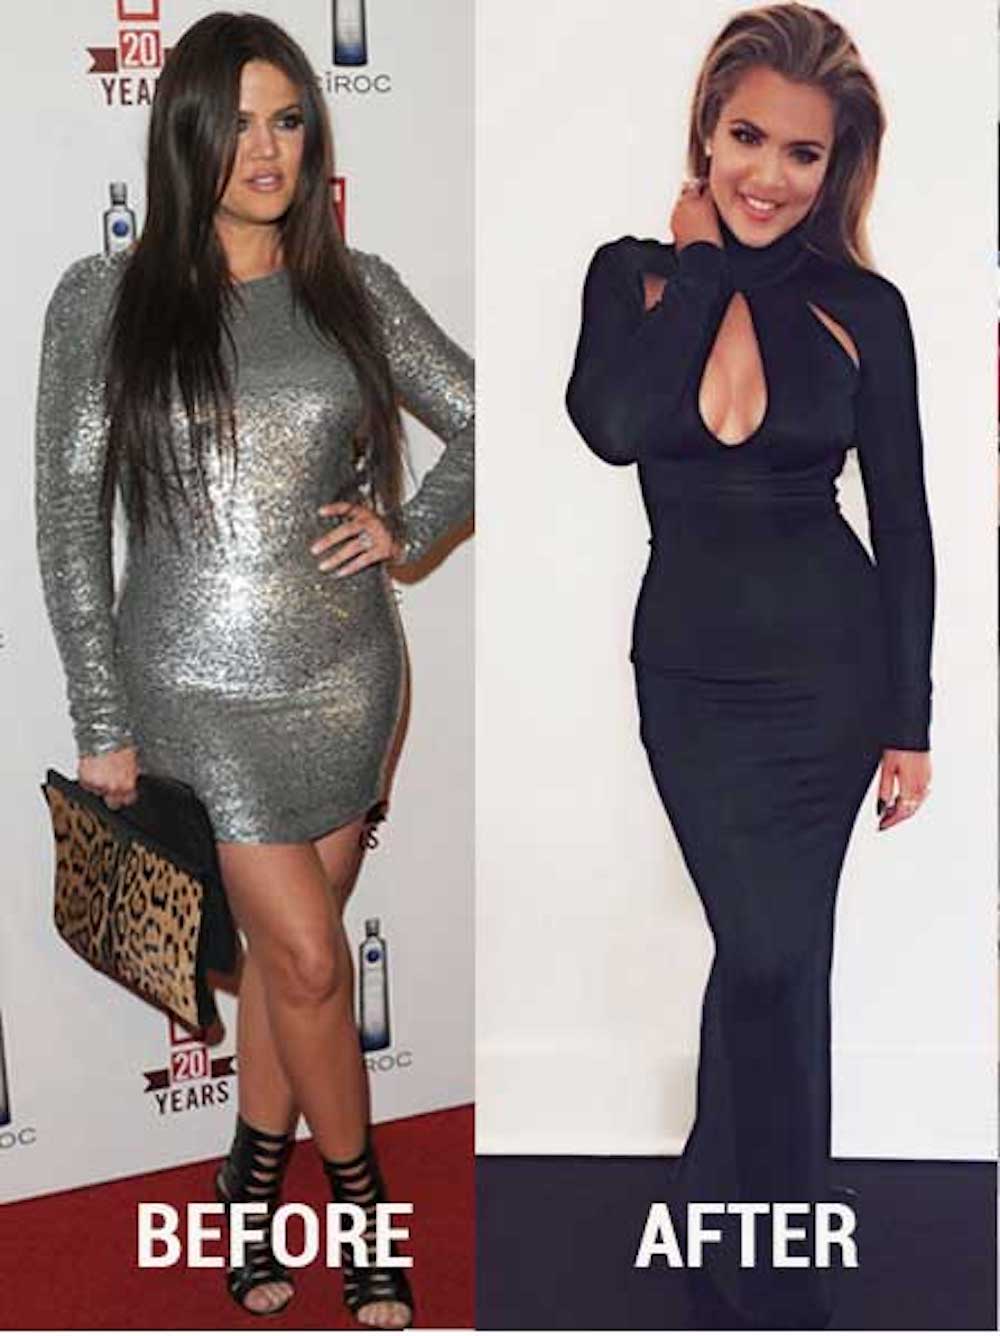 ENTITY reports on Khloe Kardashian waist trainer.